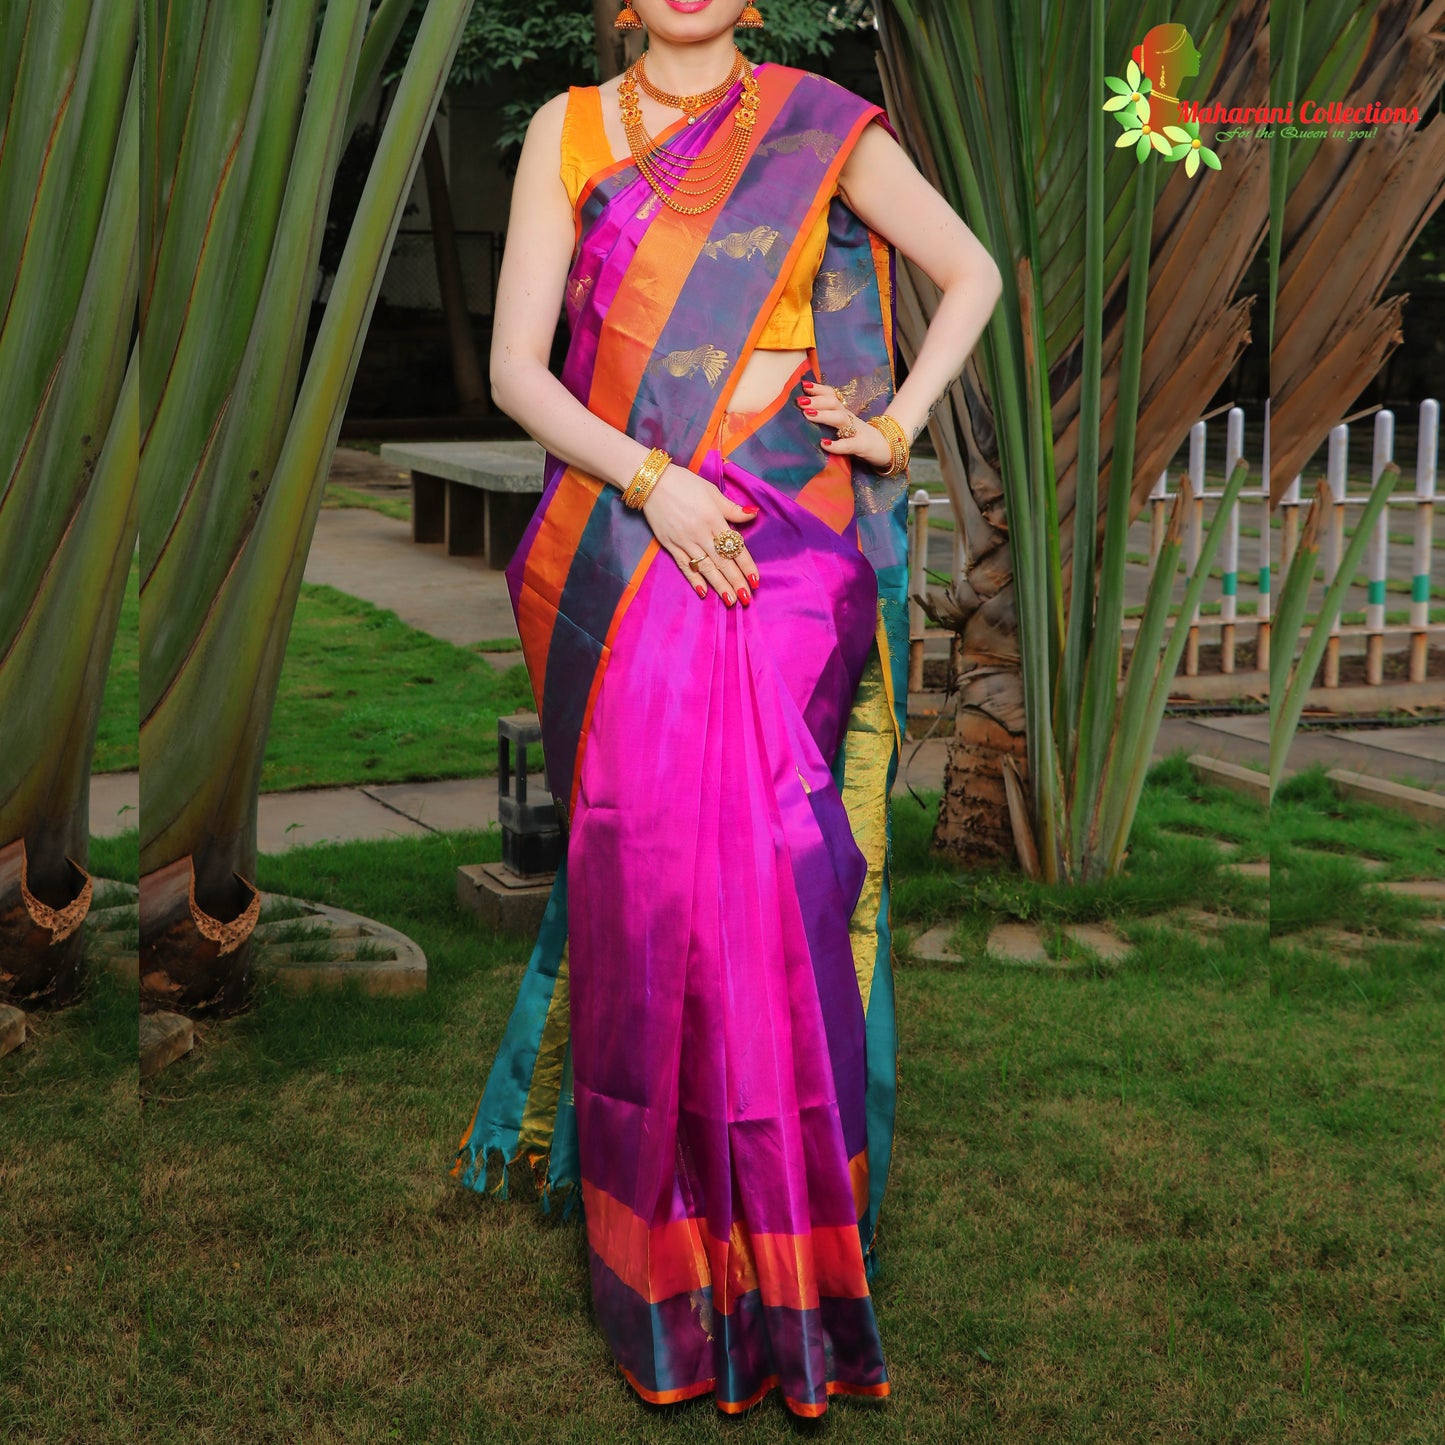 Maharani's Pure Handloom Kanjivaram Silk Saree - Purple with Turquoise Pallu and Golden Zari Border